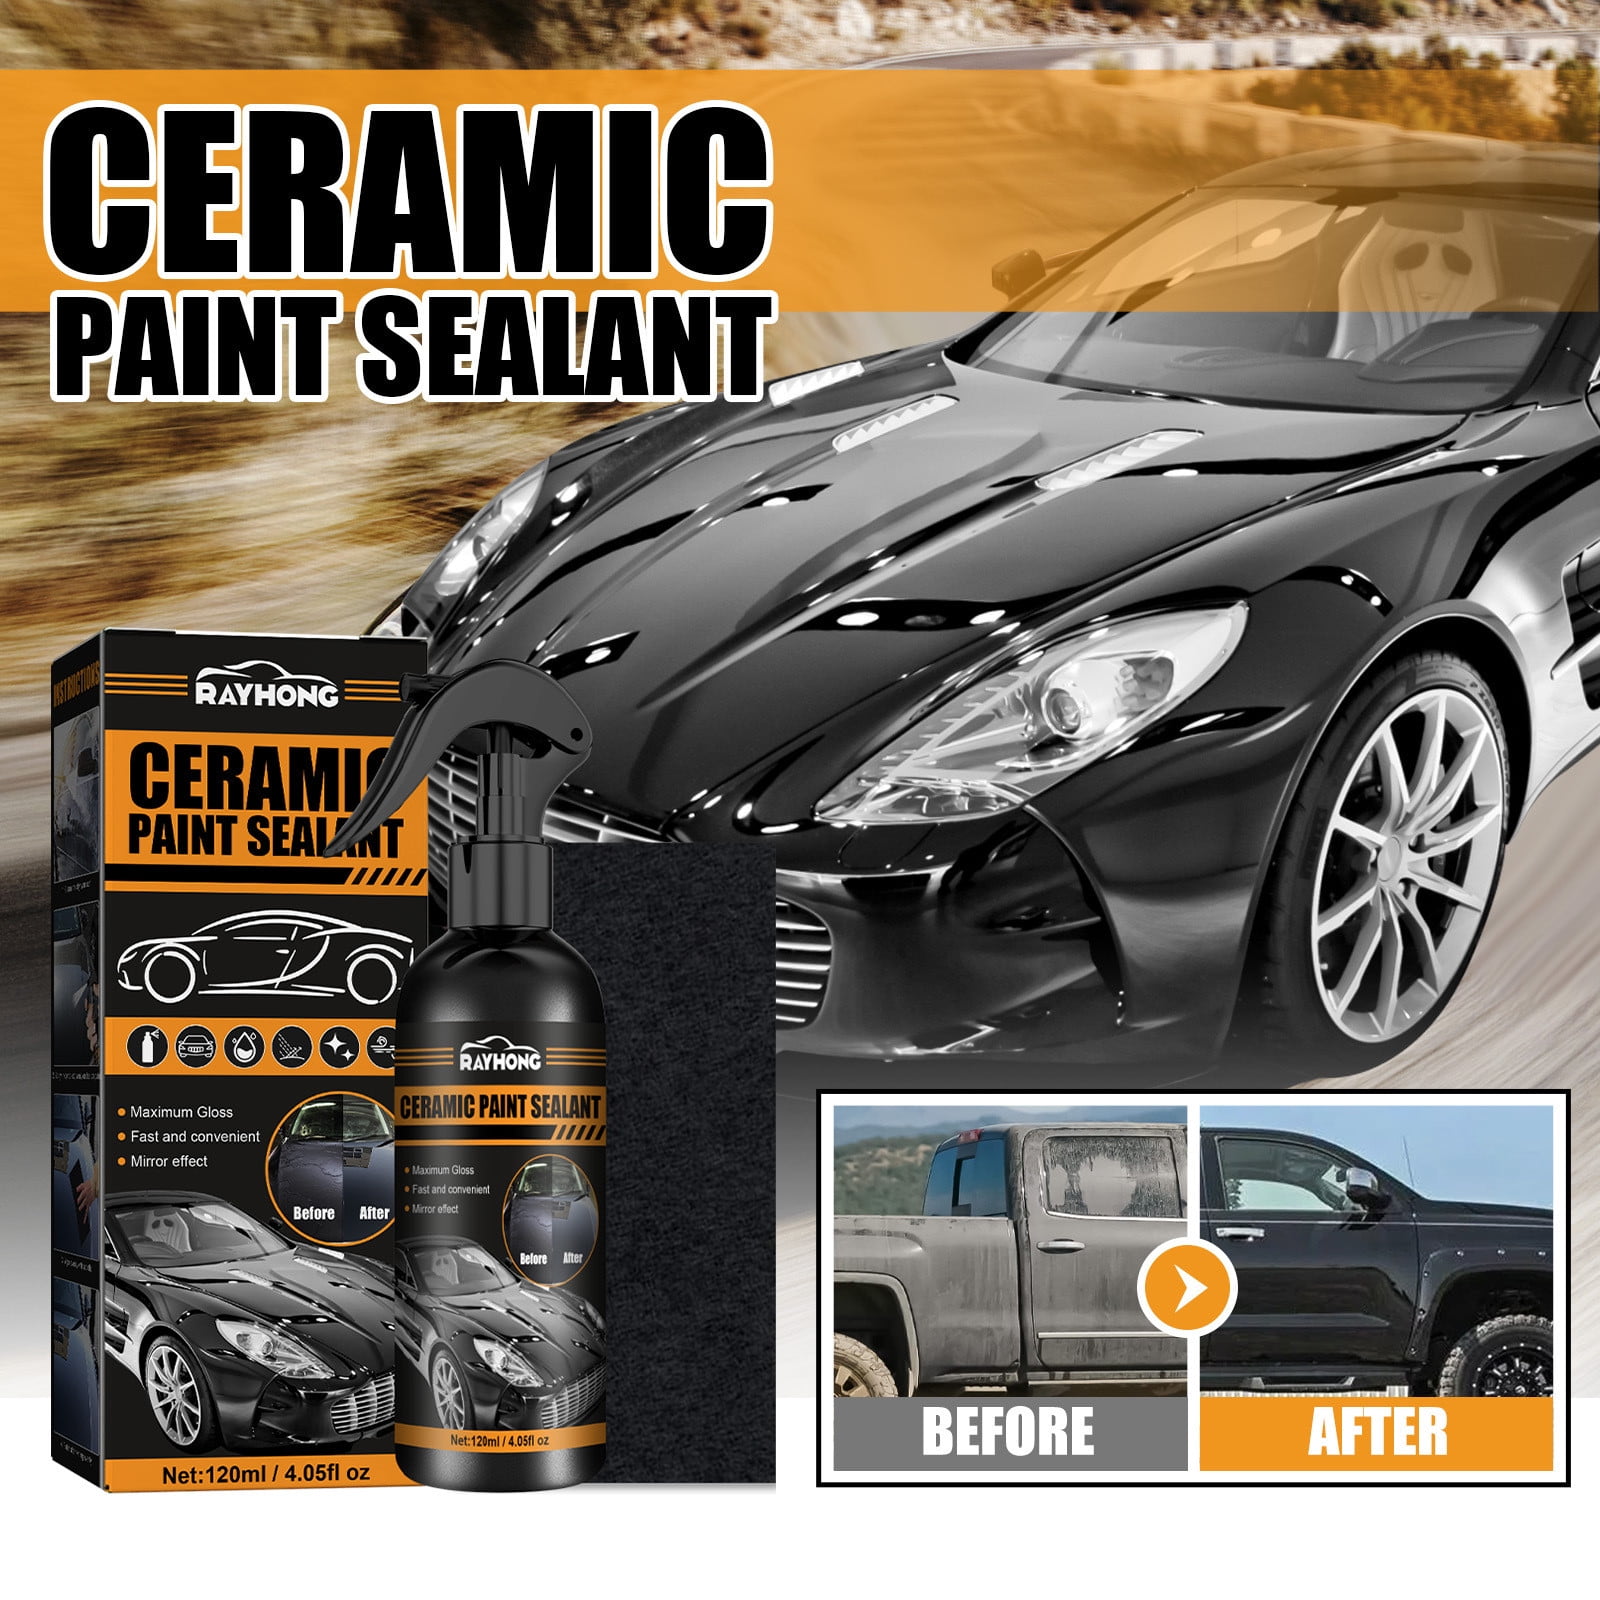 Sopami Car Coating Spray,Sopami Oil Film Emulsion Glass Cleaner Sopami  Quick Effect Coating Agent,Sopami Quickly Coat Car Wax Polish Spray  Waterless